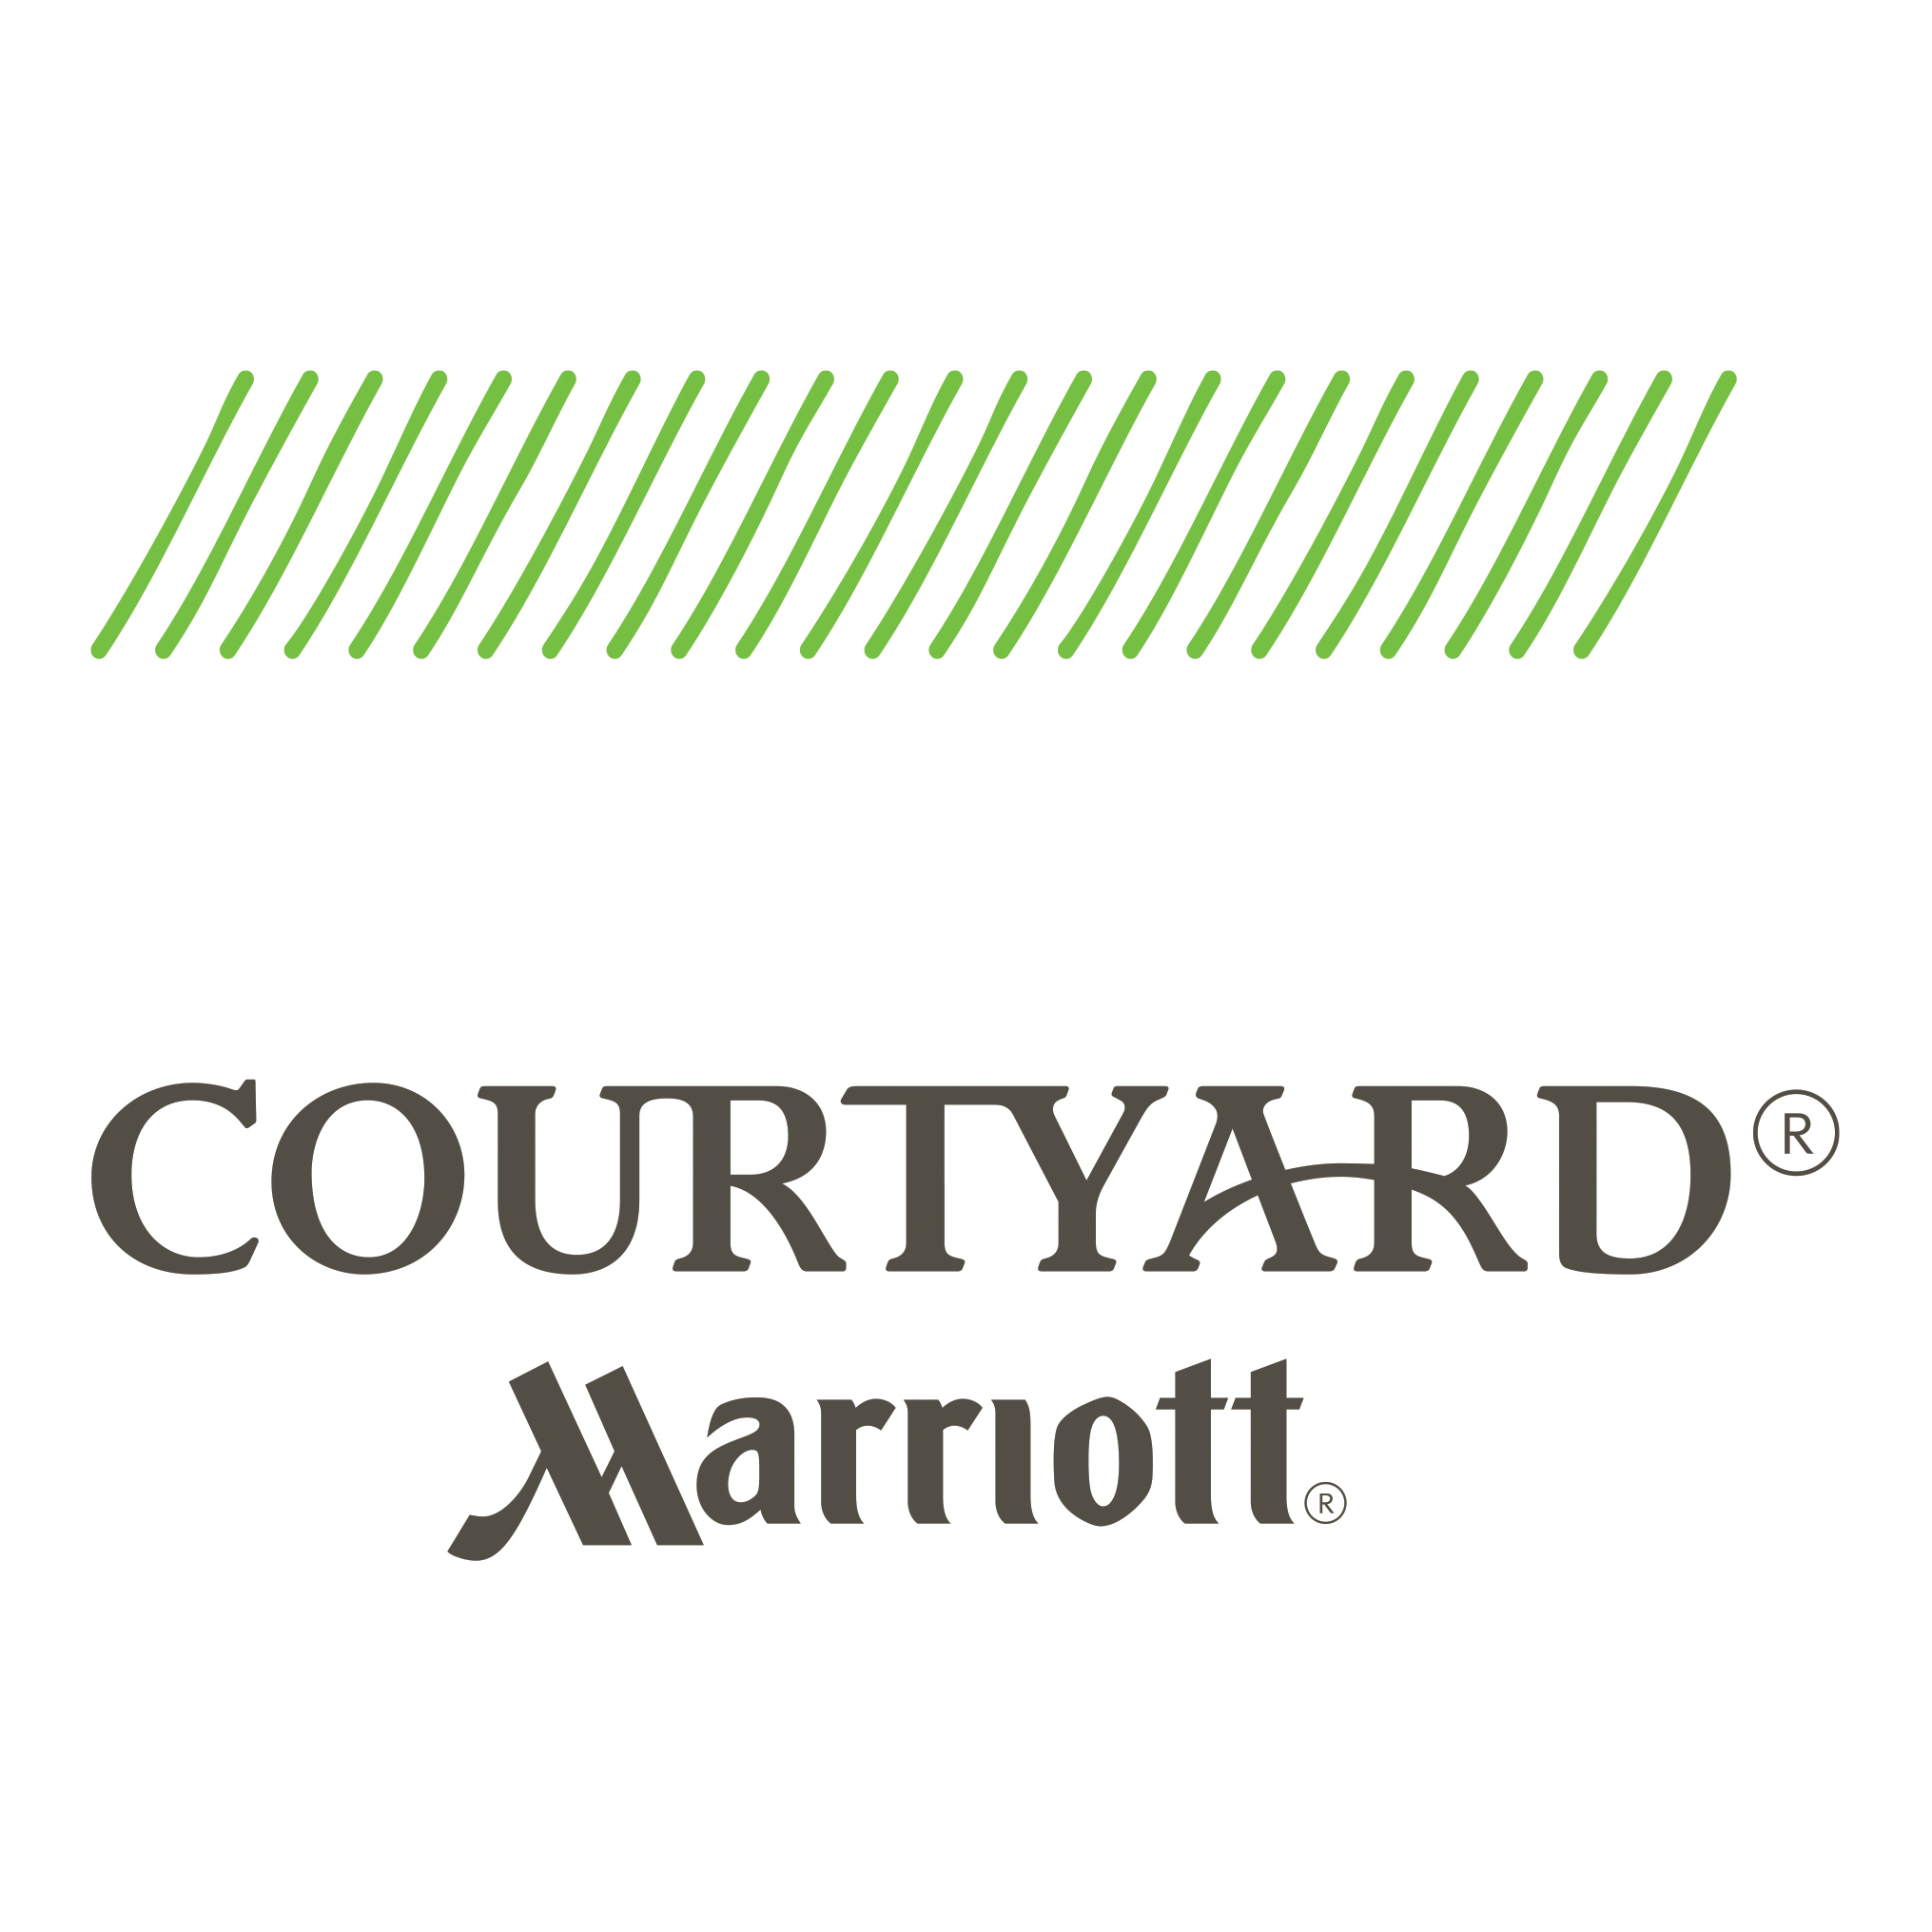 Courtyard by Marriott Atlanta Downtown Logo